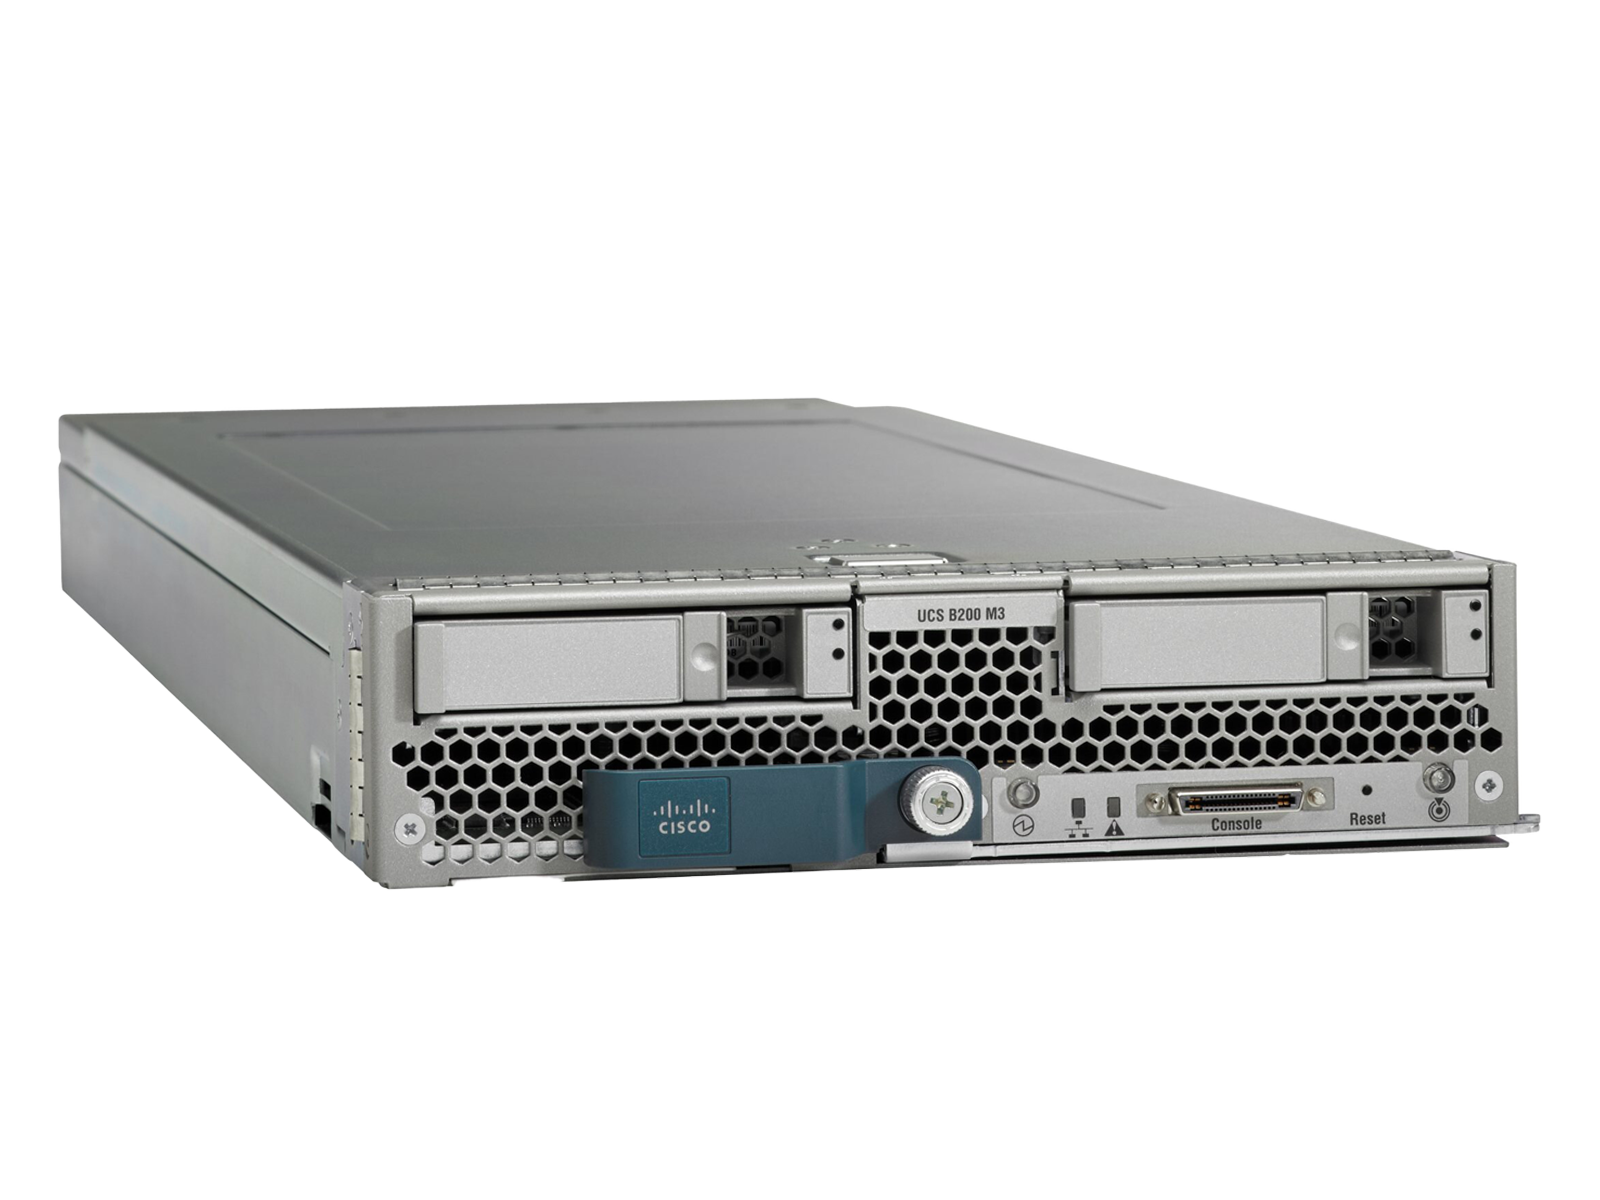 Lot of 8 Cisco B200 M3 16x E5-2670V2 2048GB Ram Blade Servers VIC1240 14900R